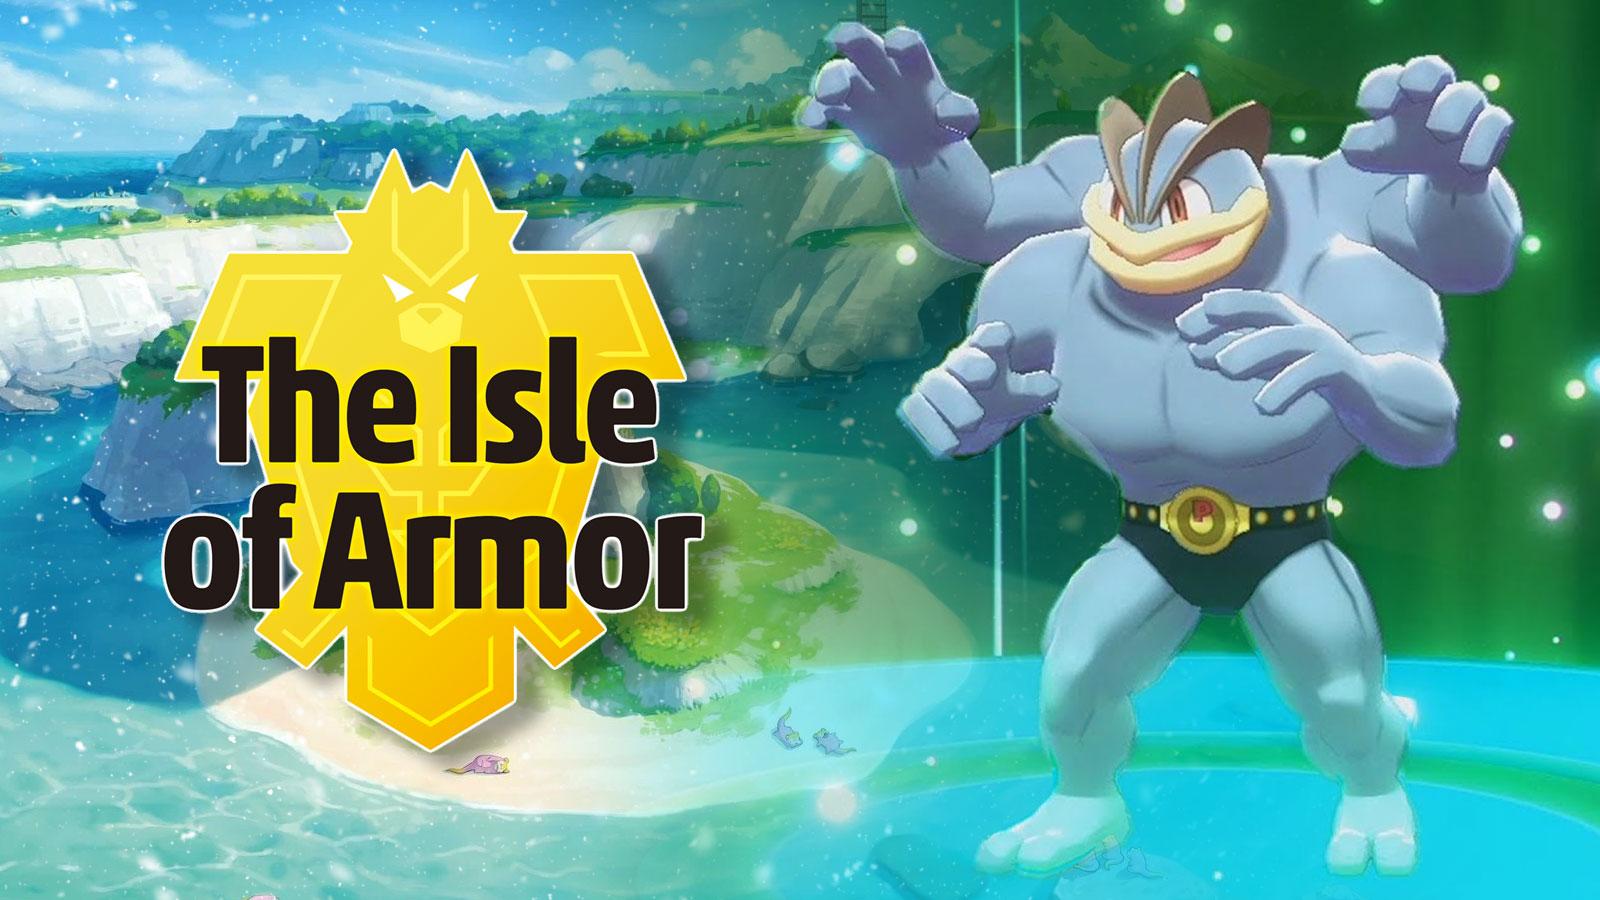 Pokémon Sword and Shield' Isle of Armor: How to get Pokémon to